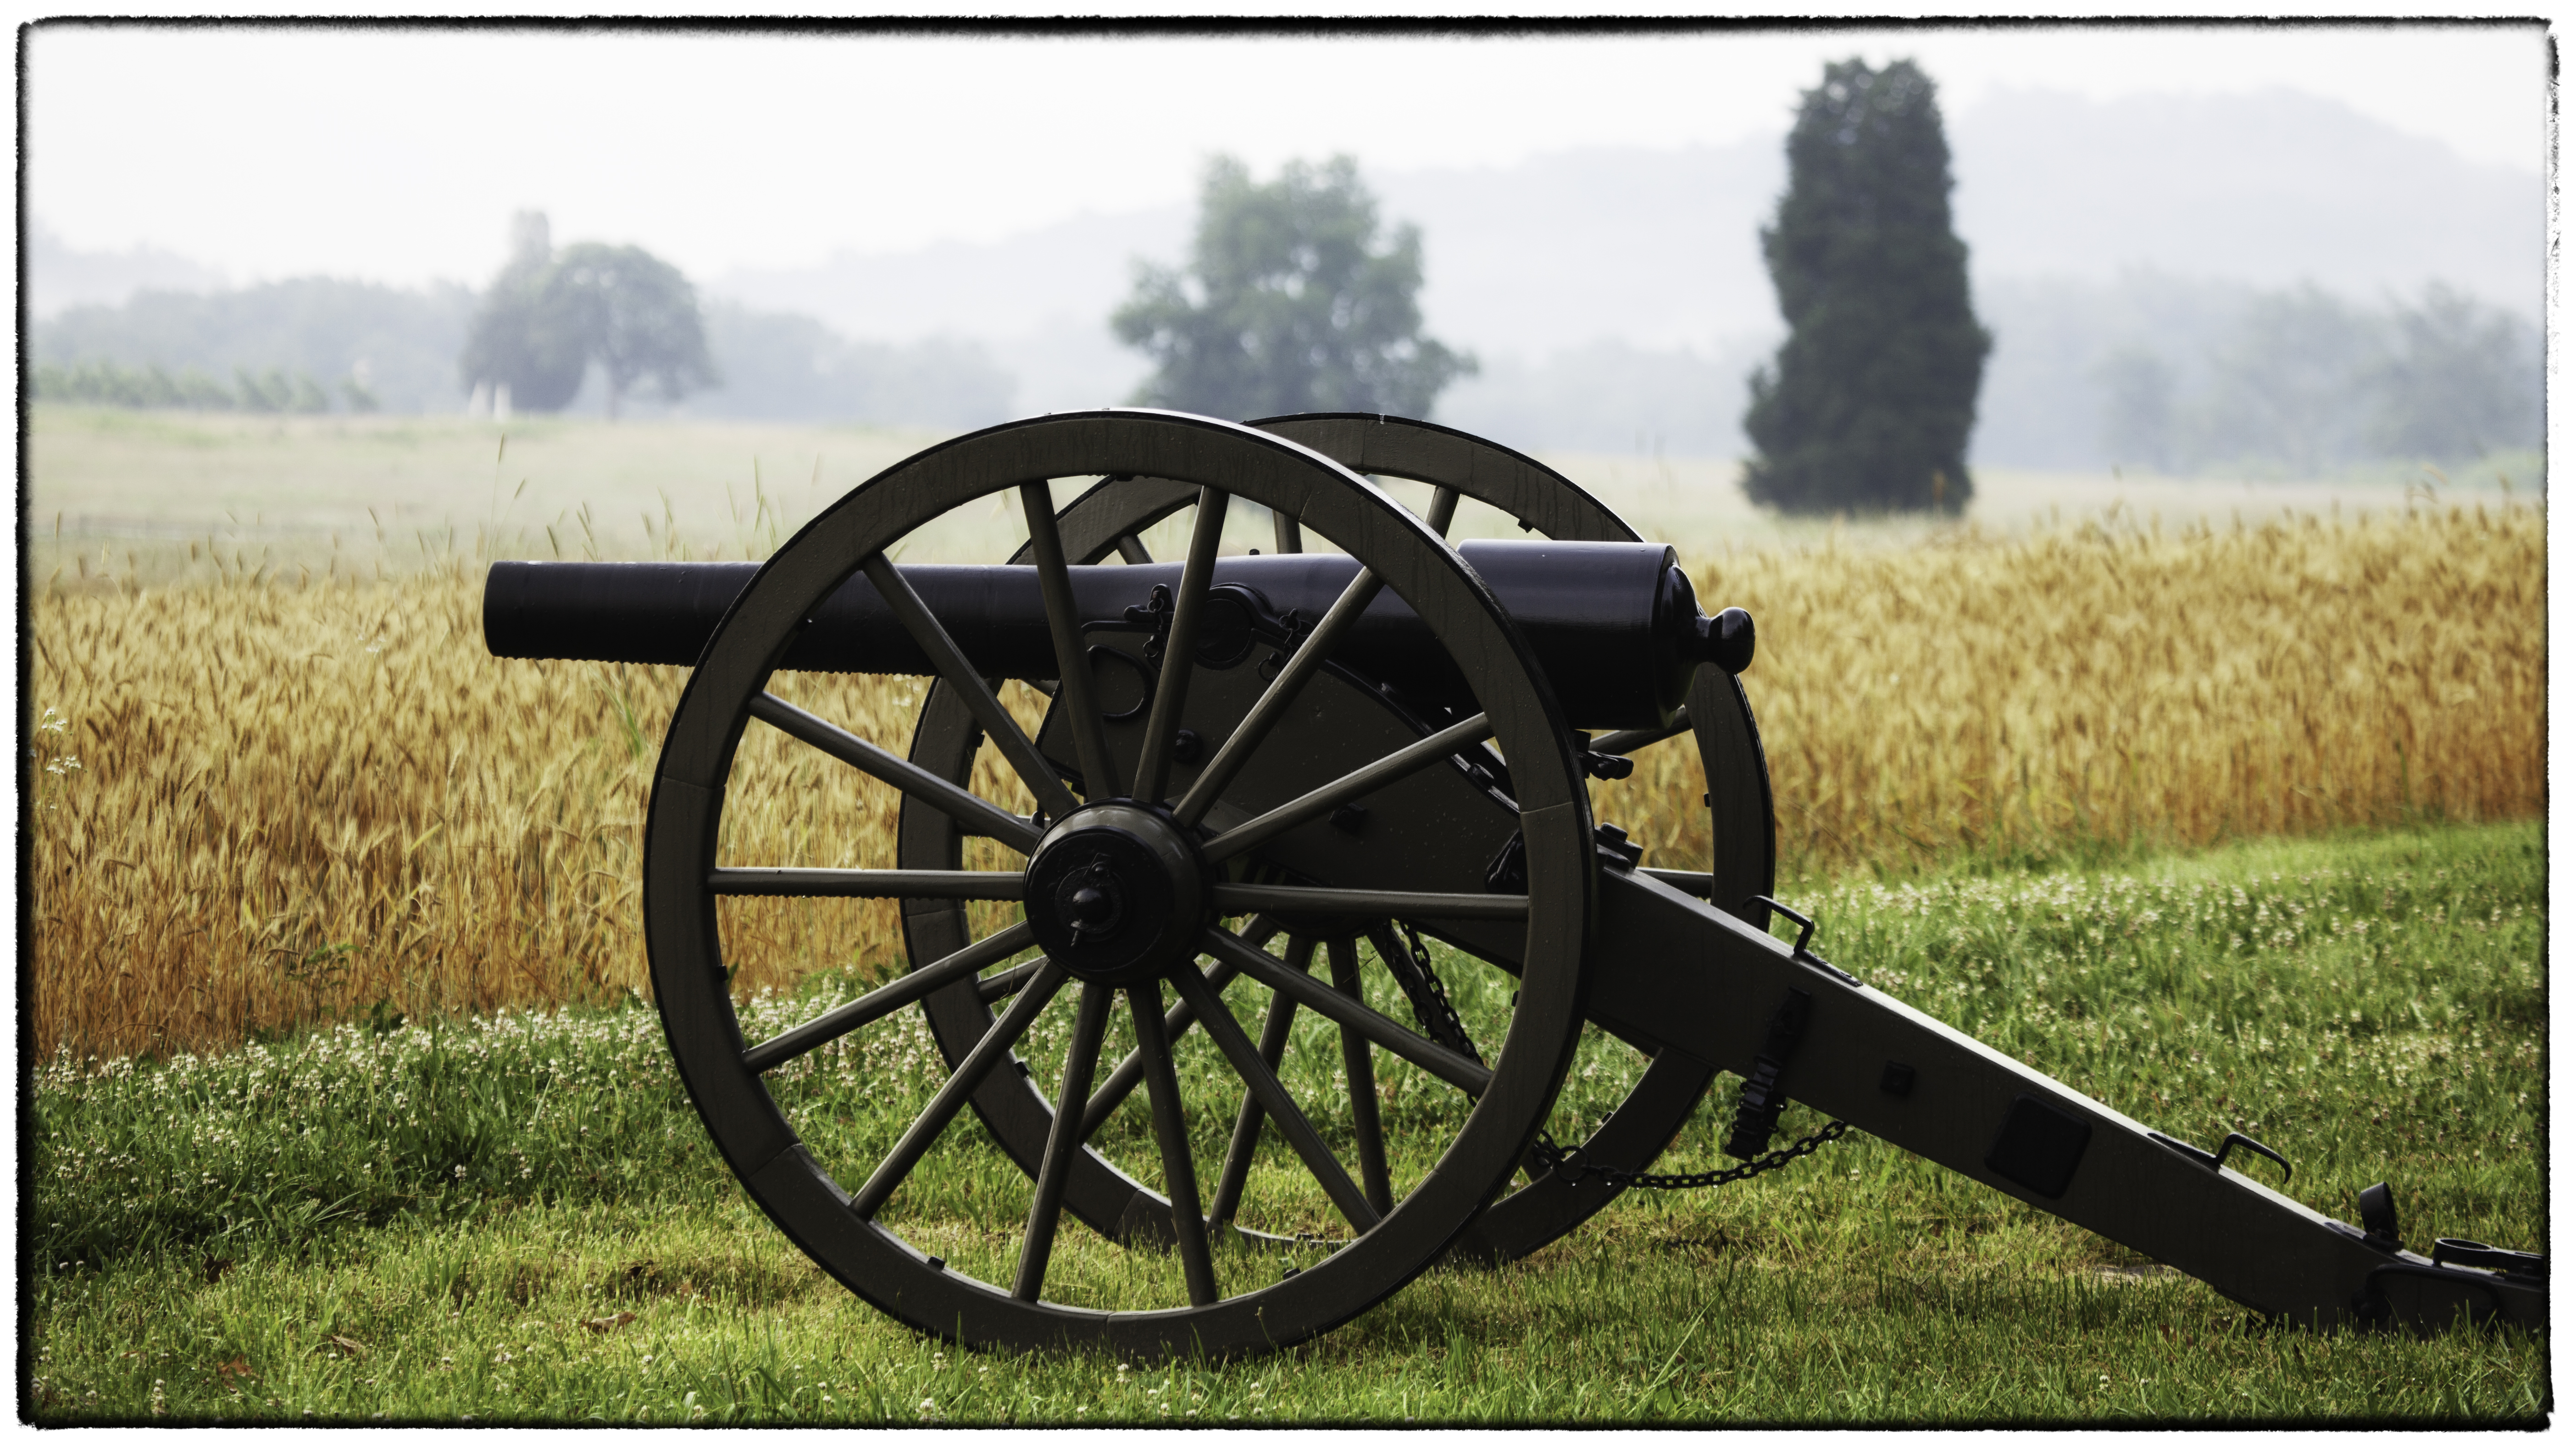 Ranger programs at Gettysburg begin June 7 | The Blog of Gettysburg ...